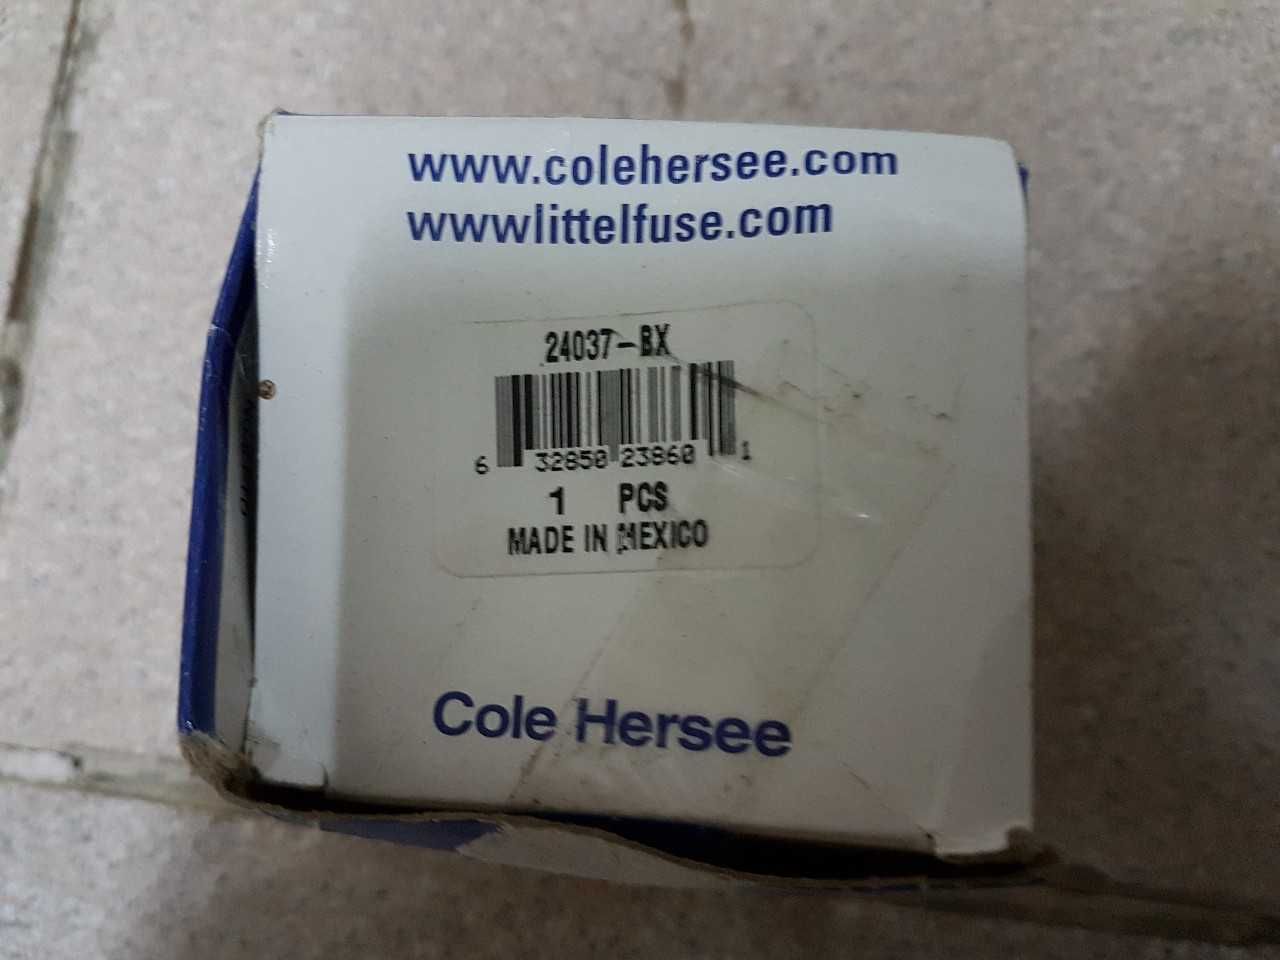 24037-BX Cole Hersee (Littelfuse) реле (соленоид), Мексика. Новое.